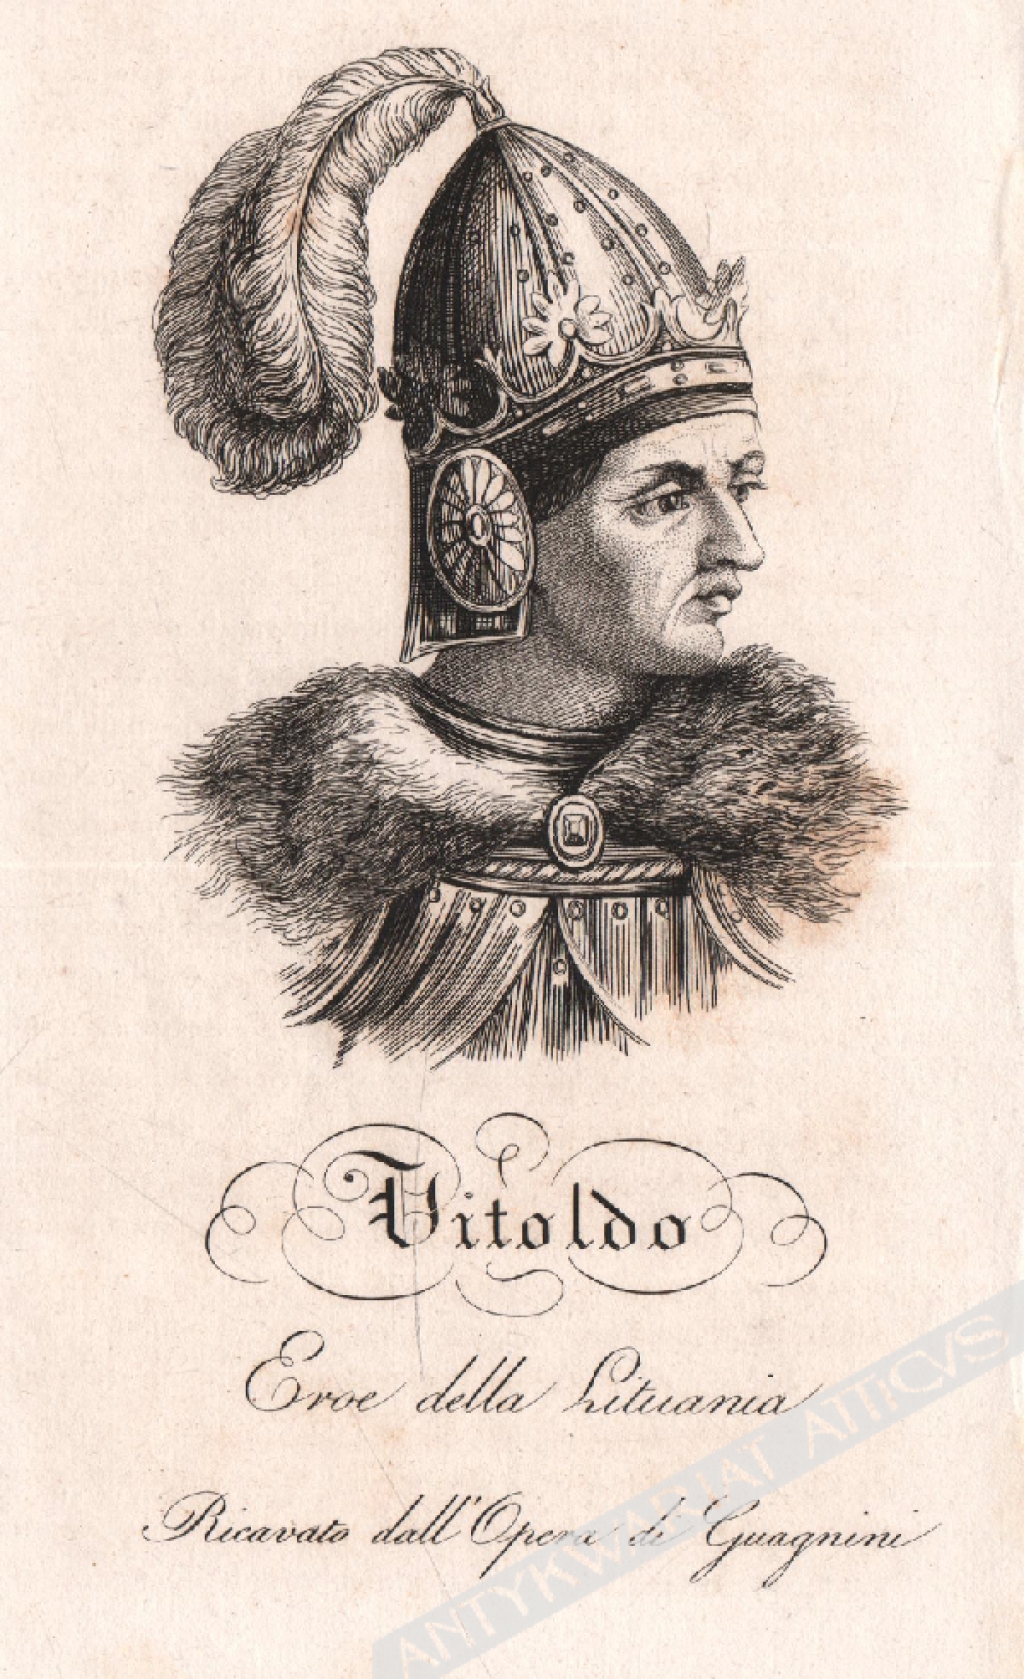 [rycina, 1831] [Wielki książę Witold] Vitoldo Eroe della Lituania